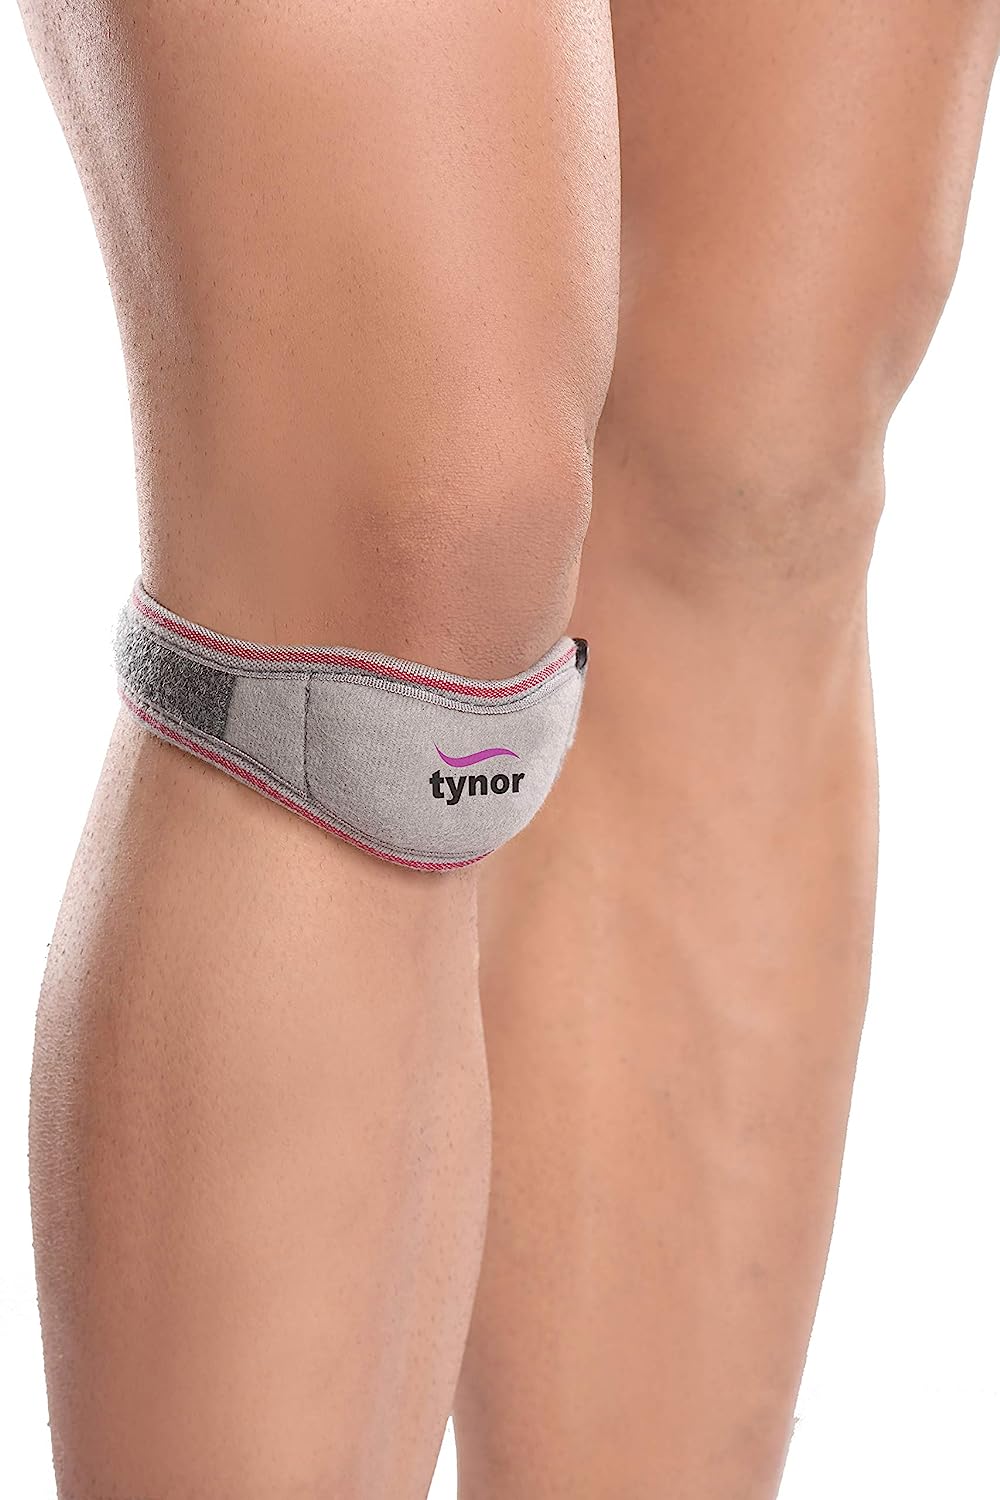 Tynor Patellar Support, Universal Size